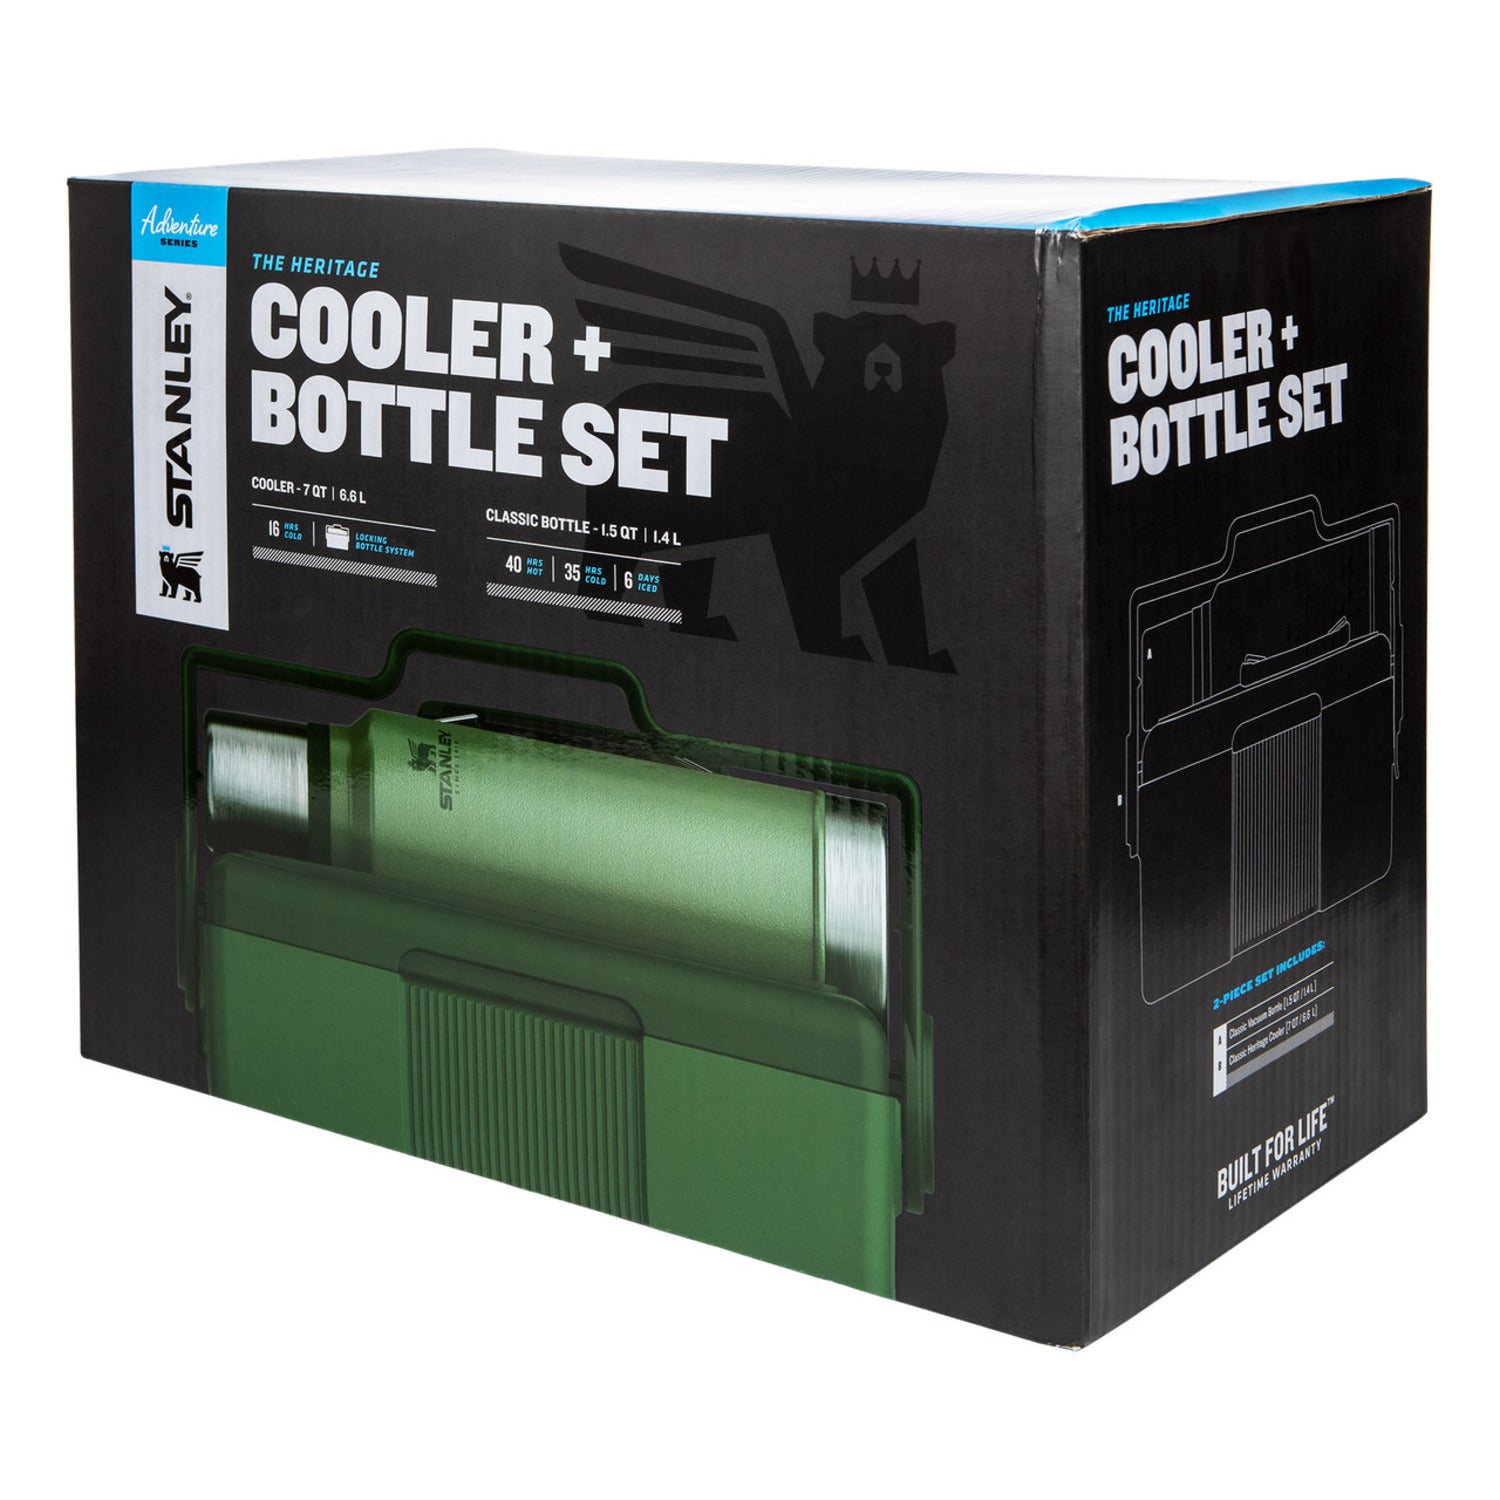 Stanley Heritage 6.6 Litre Cooler And 1 Litre Flask Bottle Combo - Green